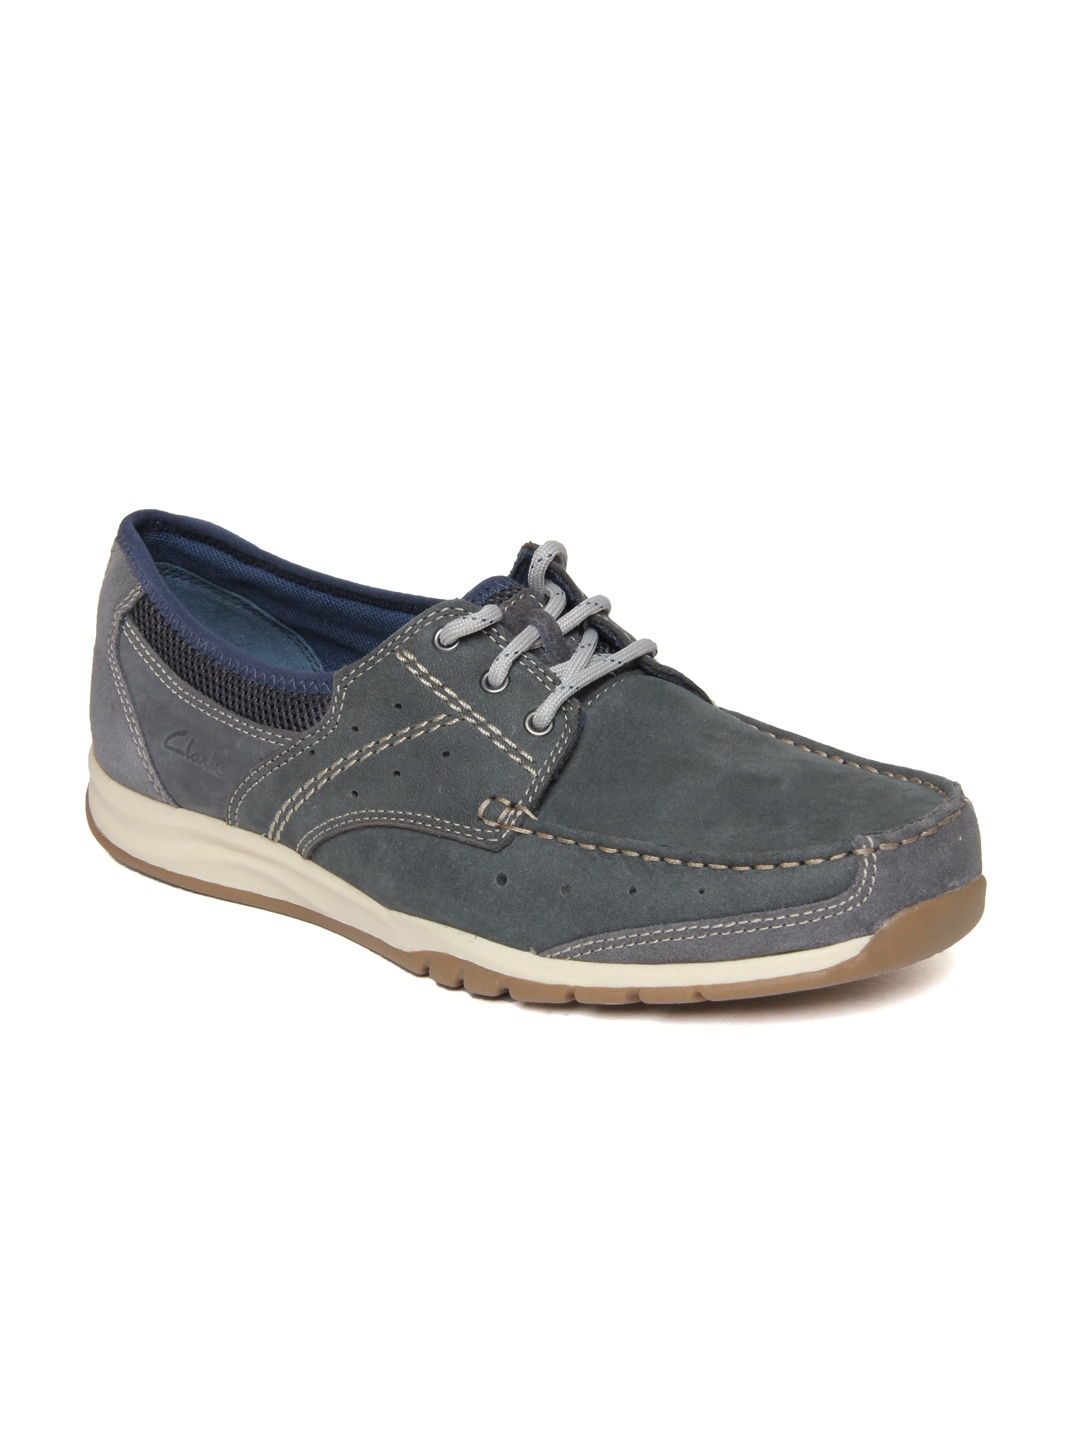 Buy Clarks Men Blue Nubuck Sneakers - Casual Shoes for Men 268221 | Myntra